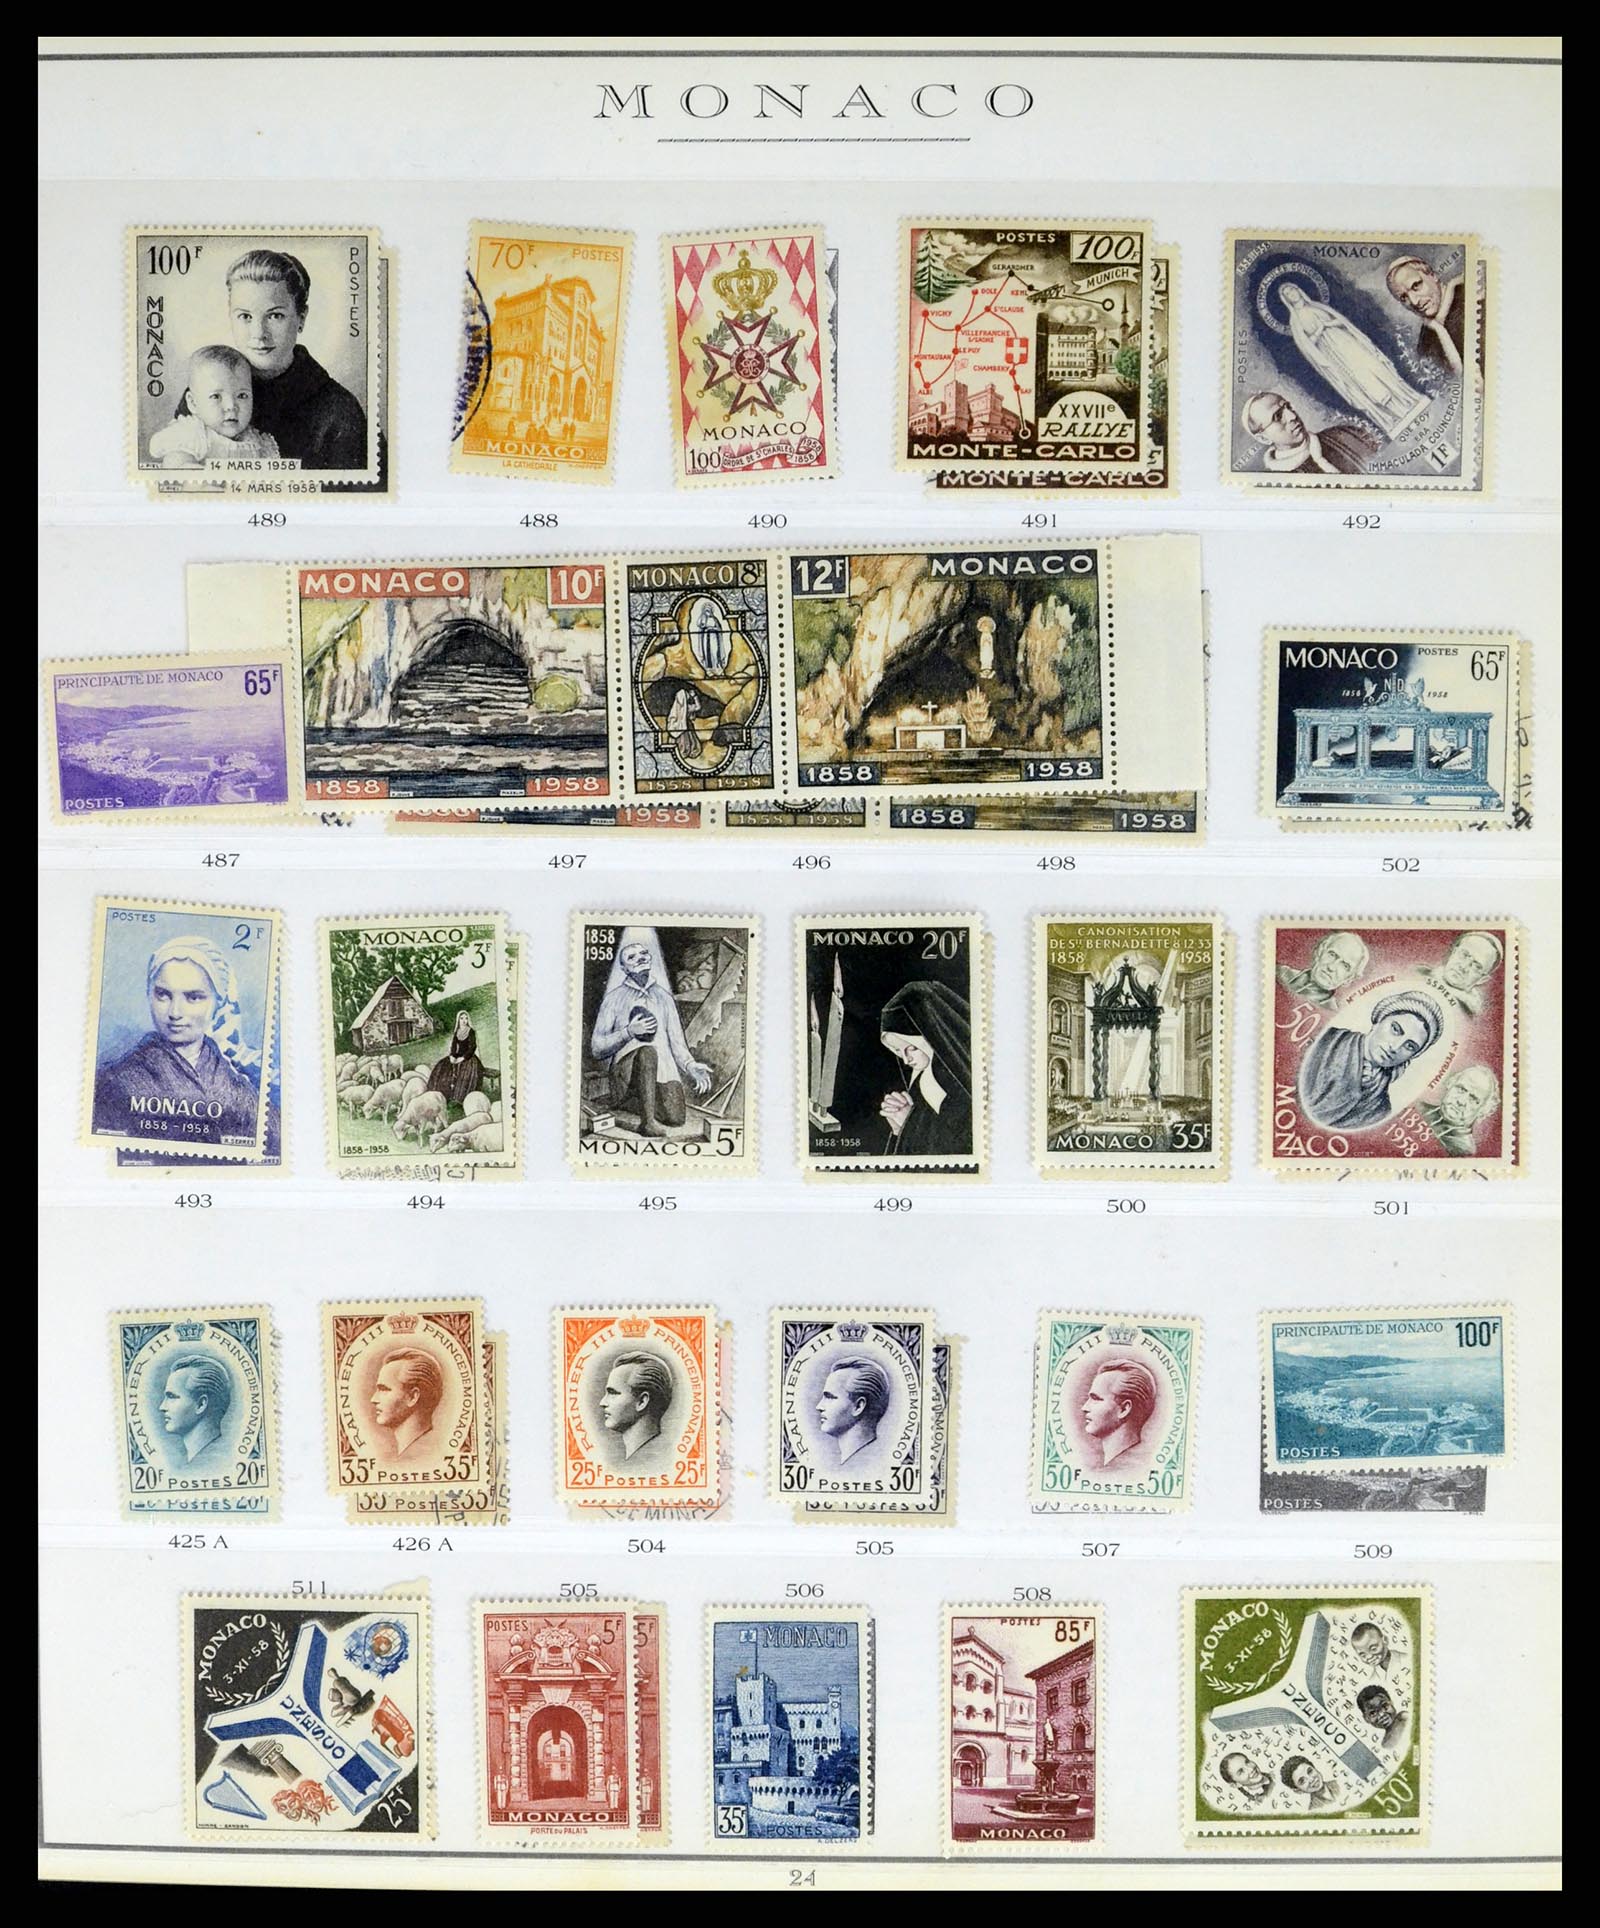 37437 045 - Stamp collection 37437 Monaco 1885-1996.